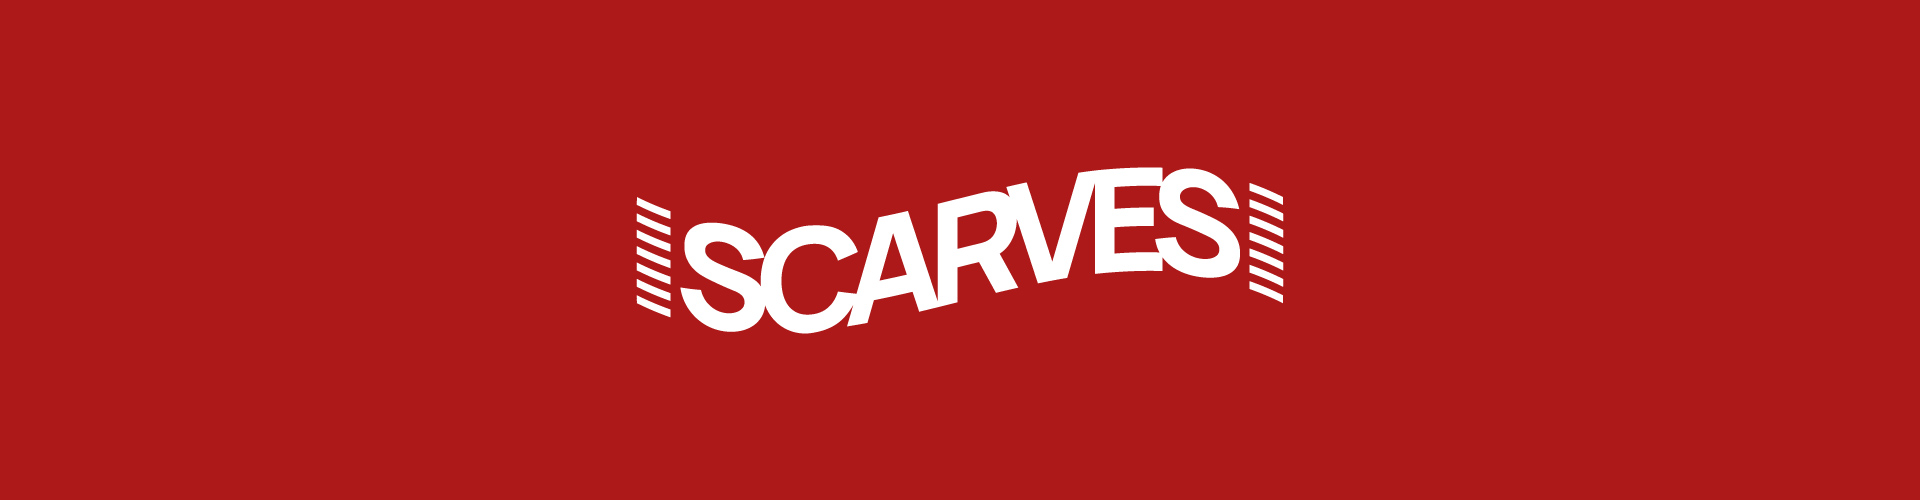 Scarves_sito_pagina